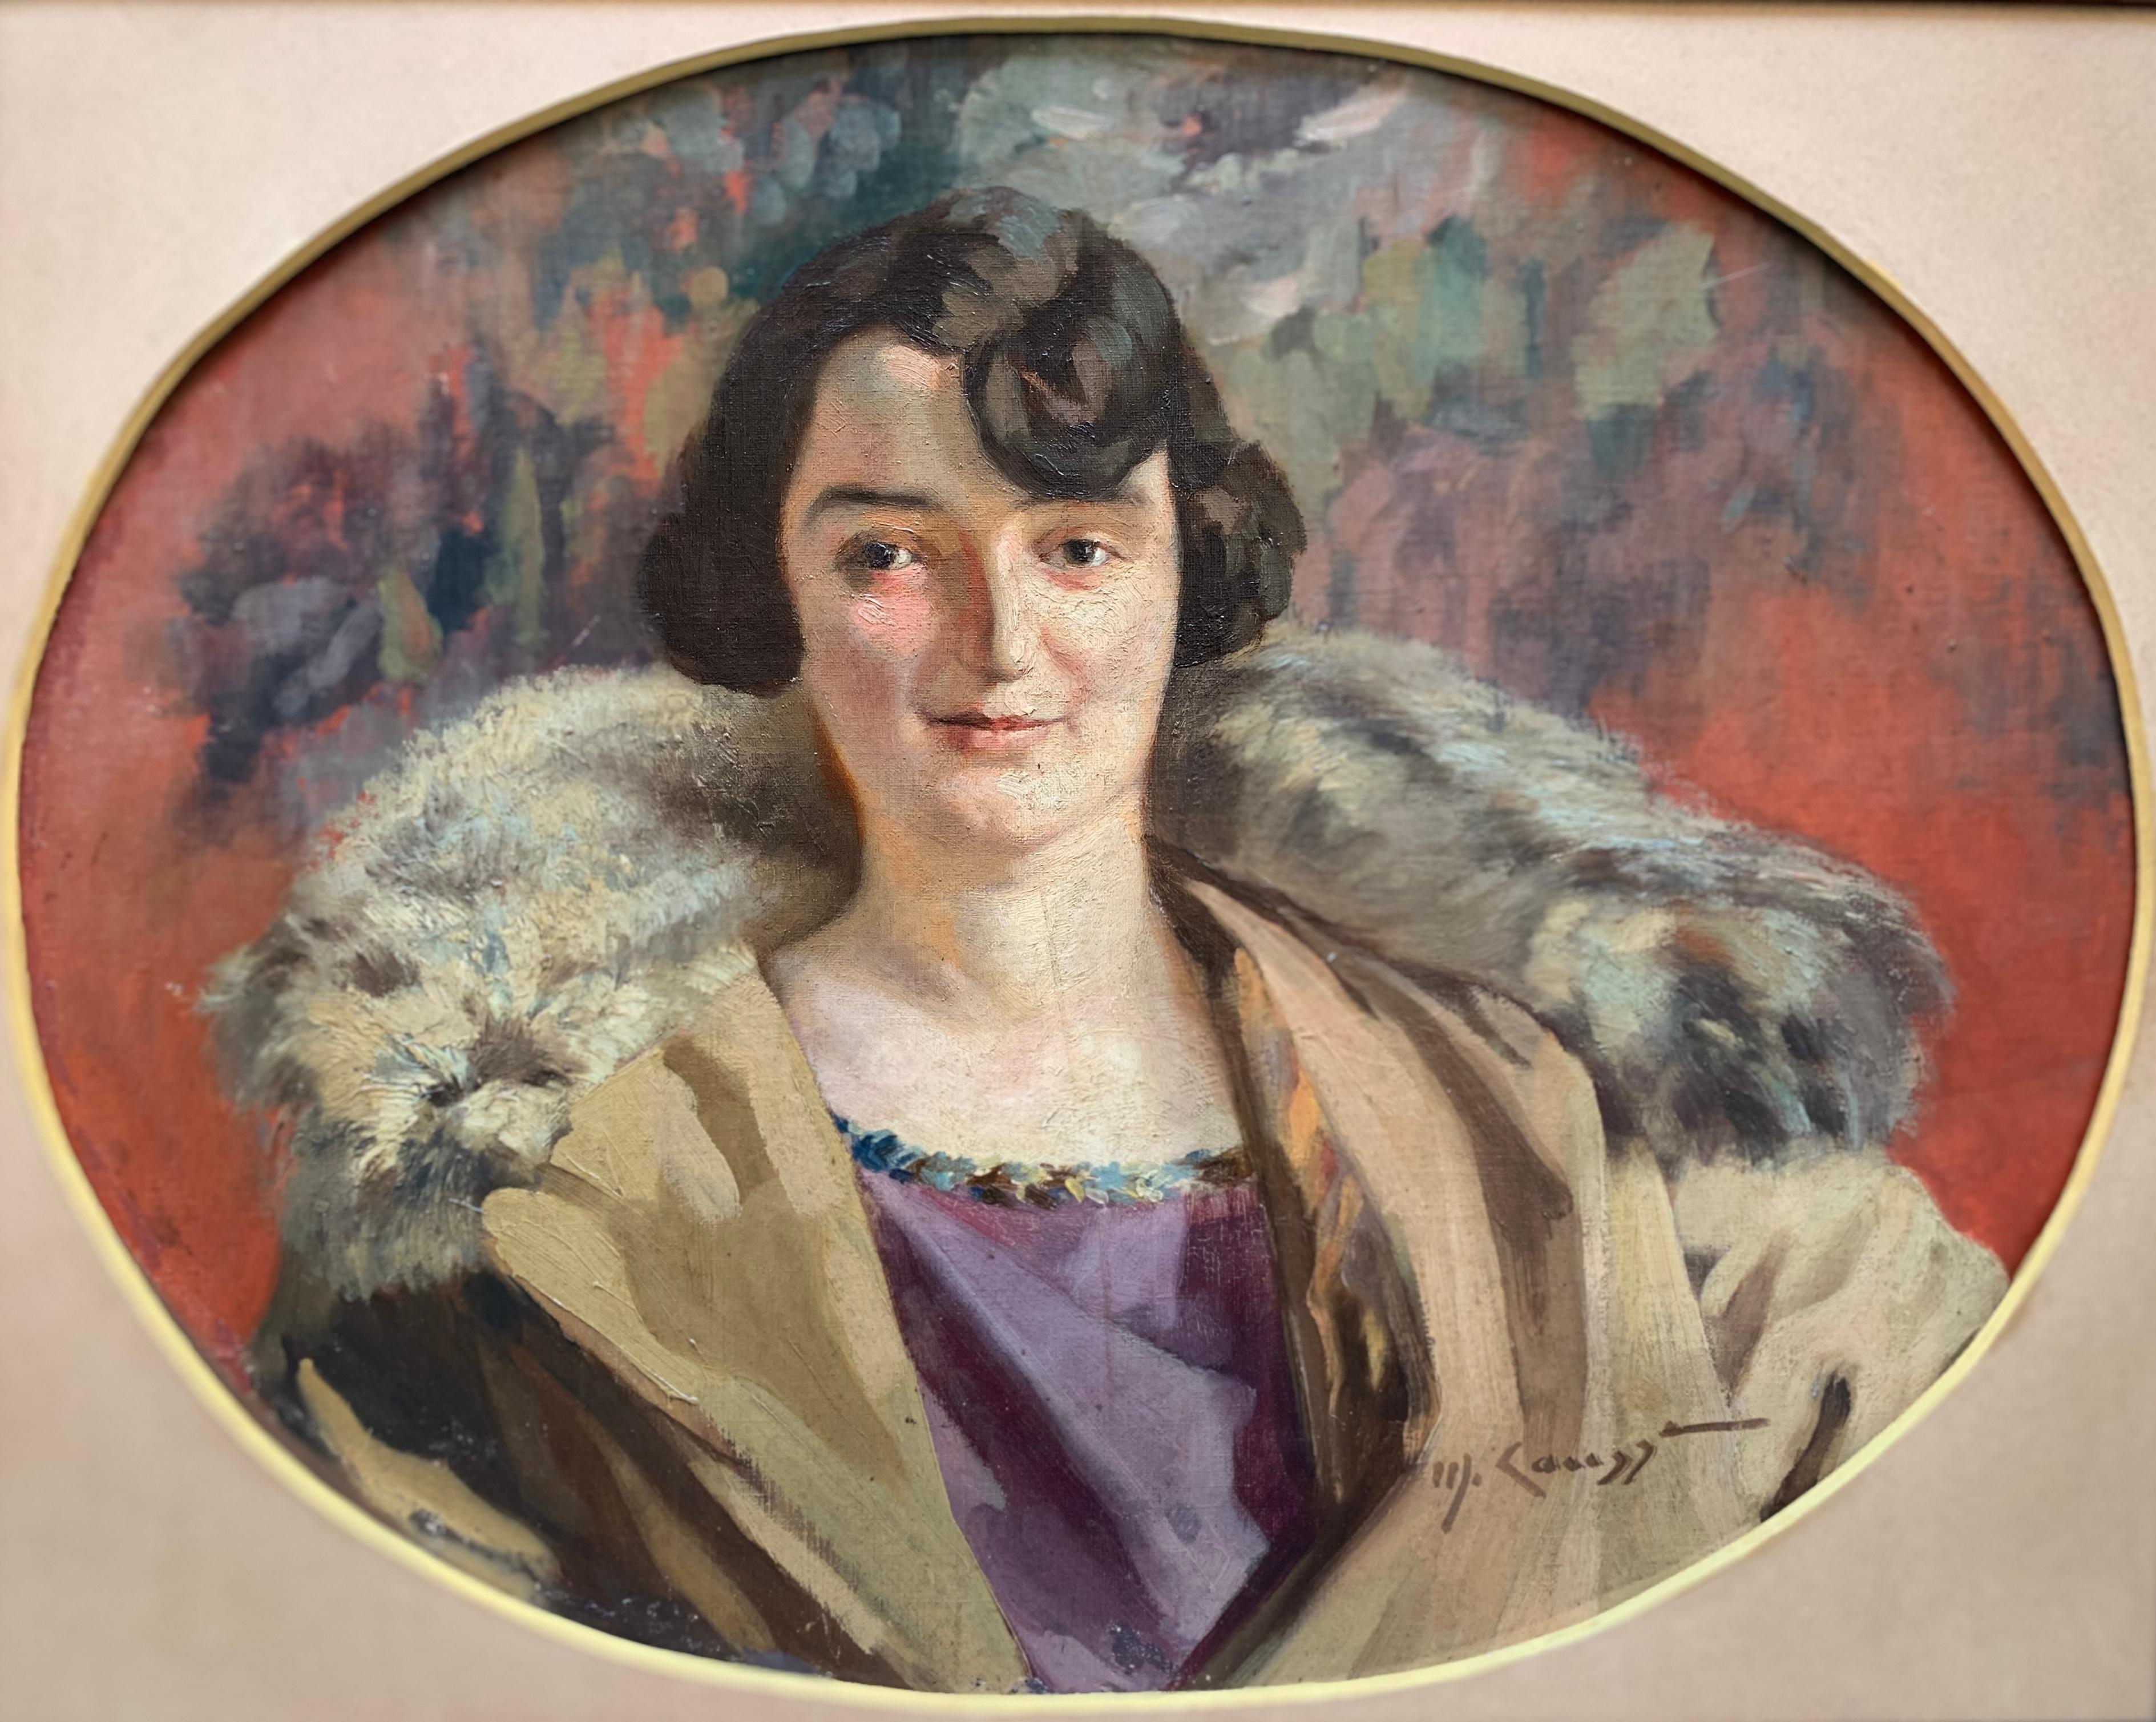 Unknown Portrait Painting - Art Deco ca. 1920. Portrait Of Lady With Bob Cut, Purple Dress And Fur Collar